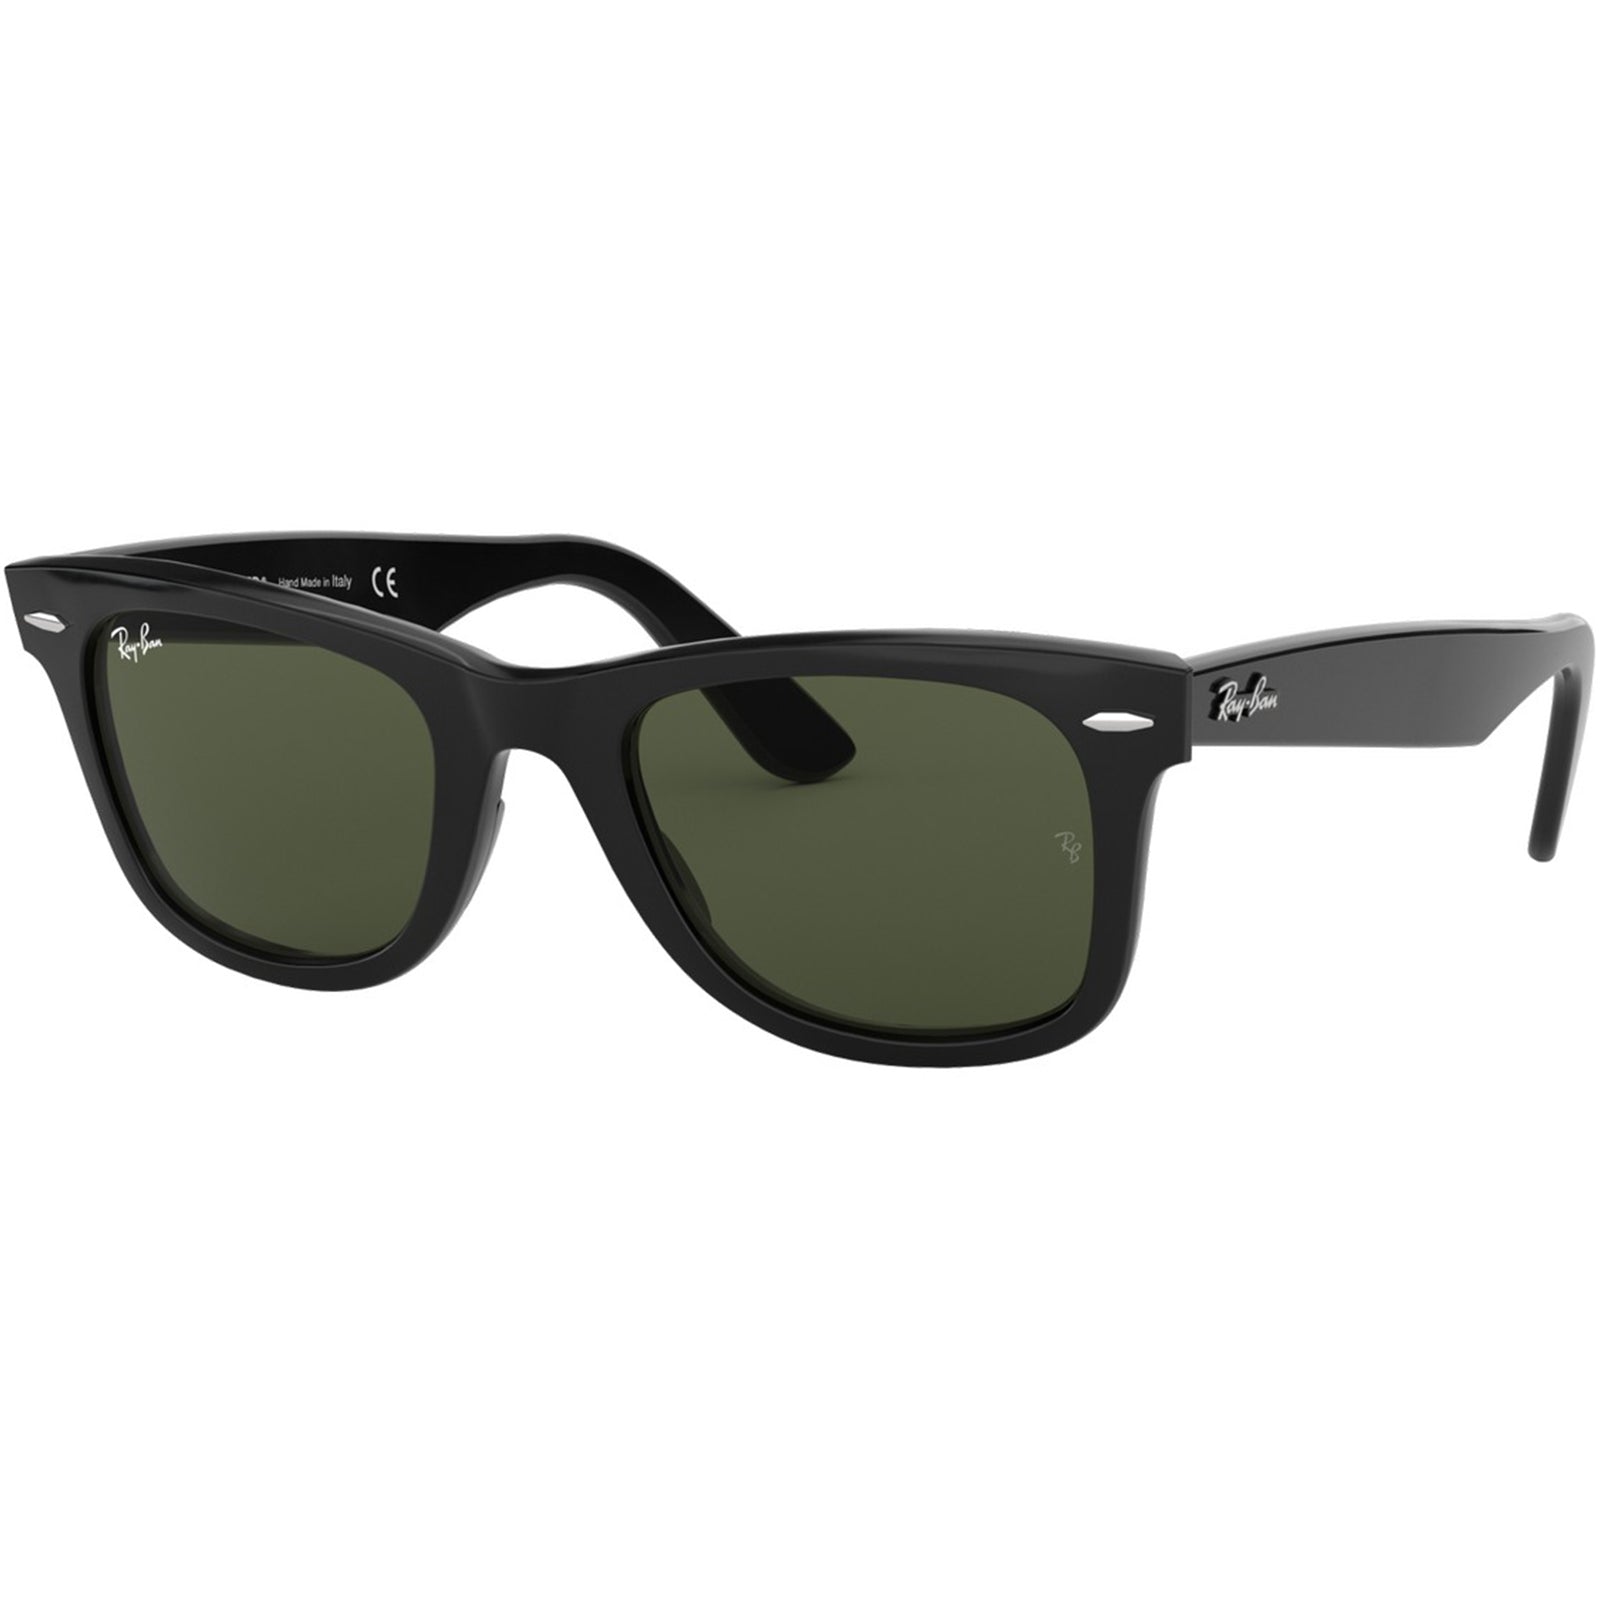 Ray-Ban Original Wayfarer Classic Adult Lifestyle Sunglasses-RB2140